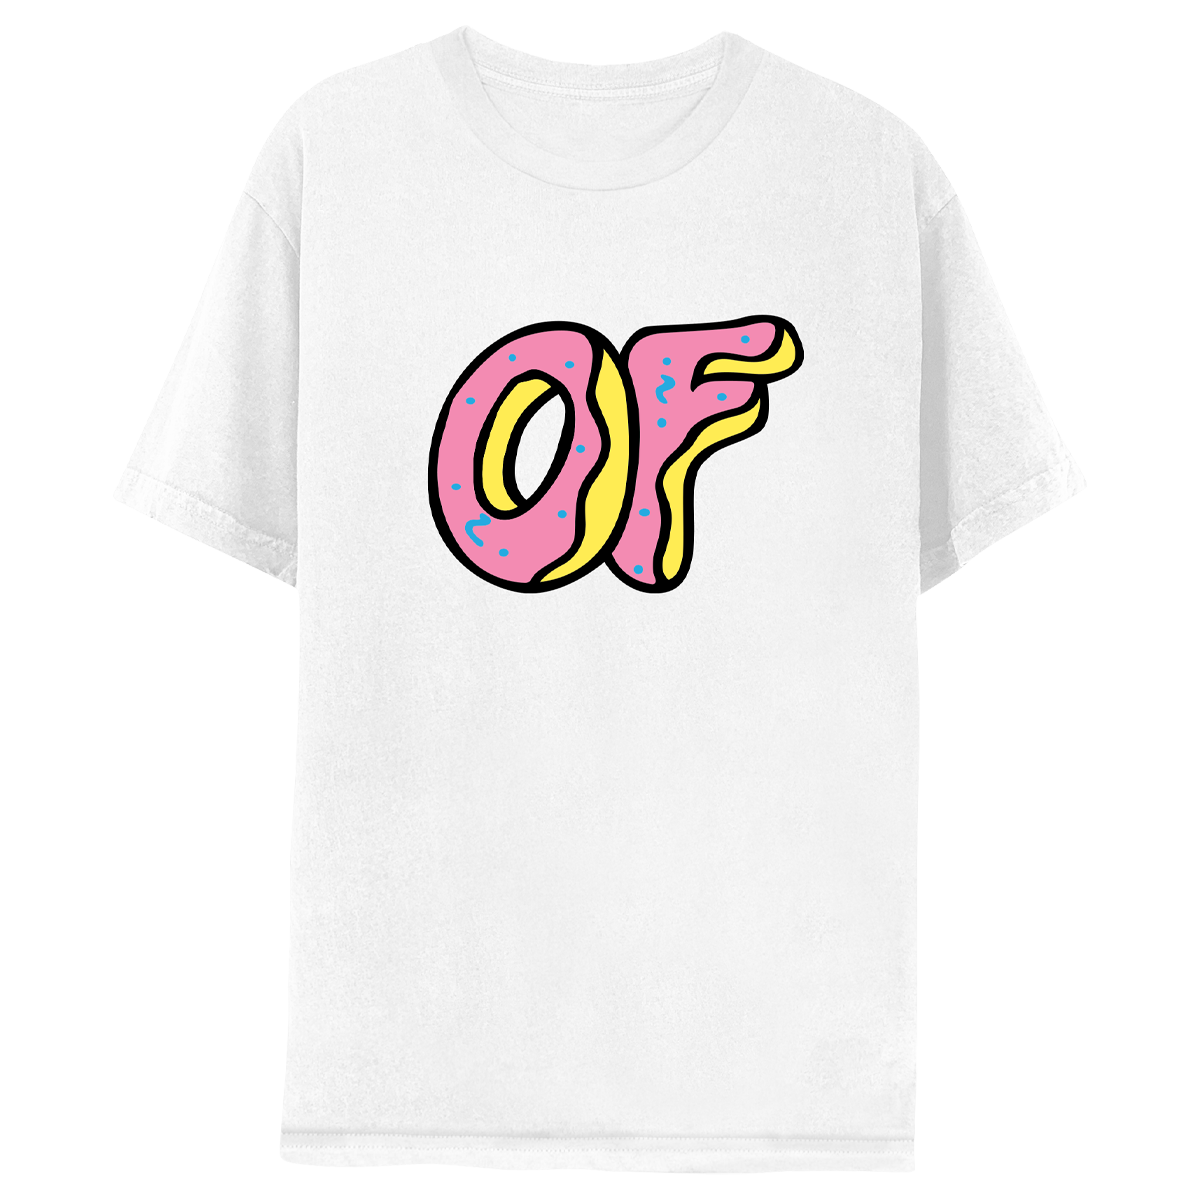 Donut Large Logo T-shirt - White-Odd Future